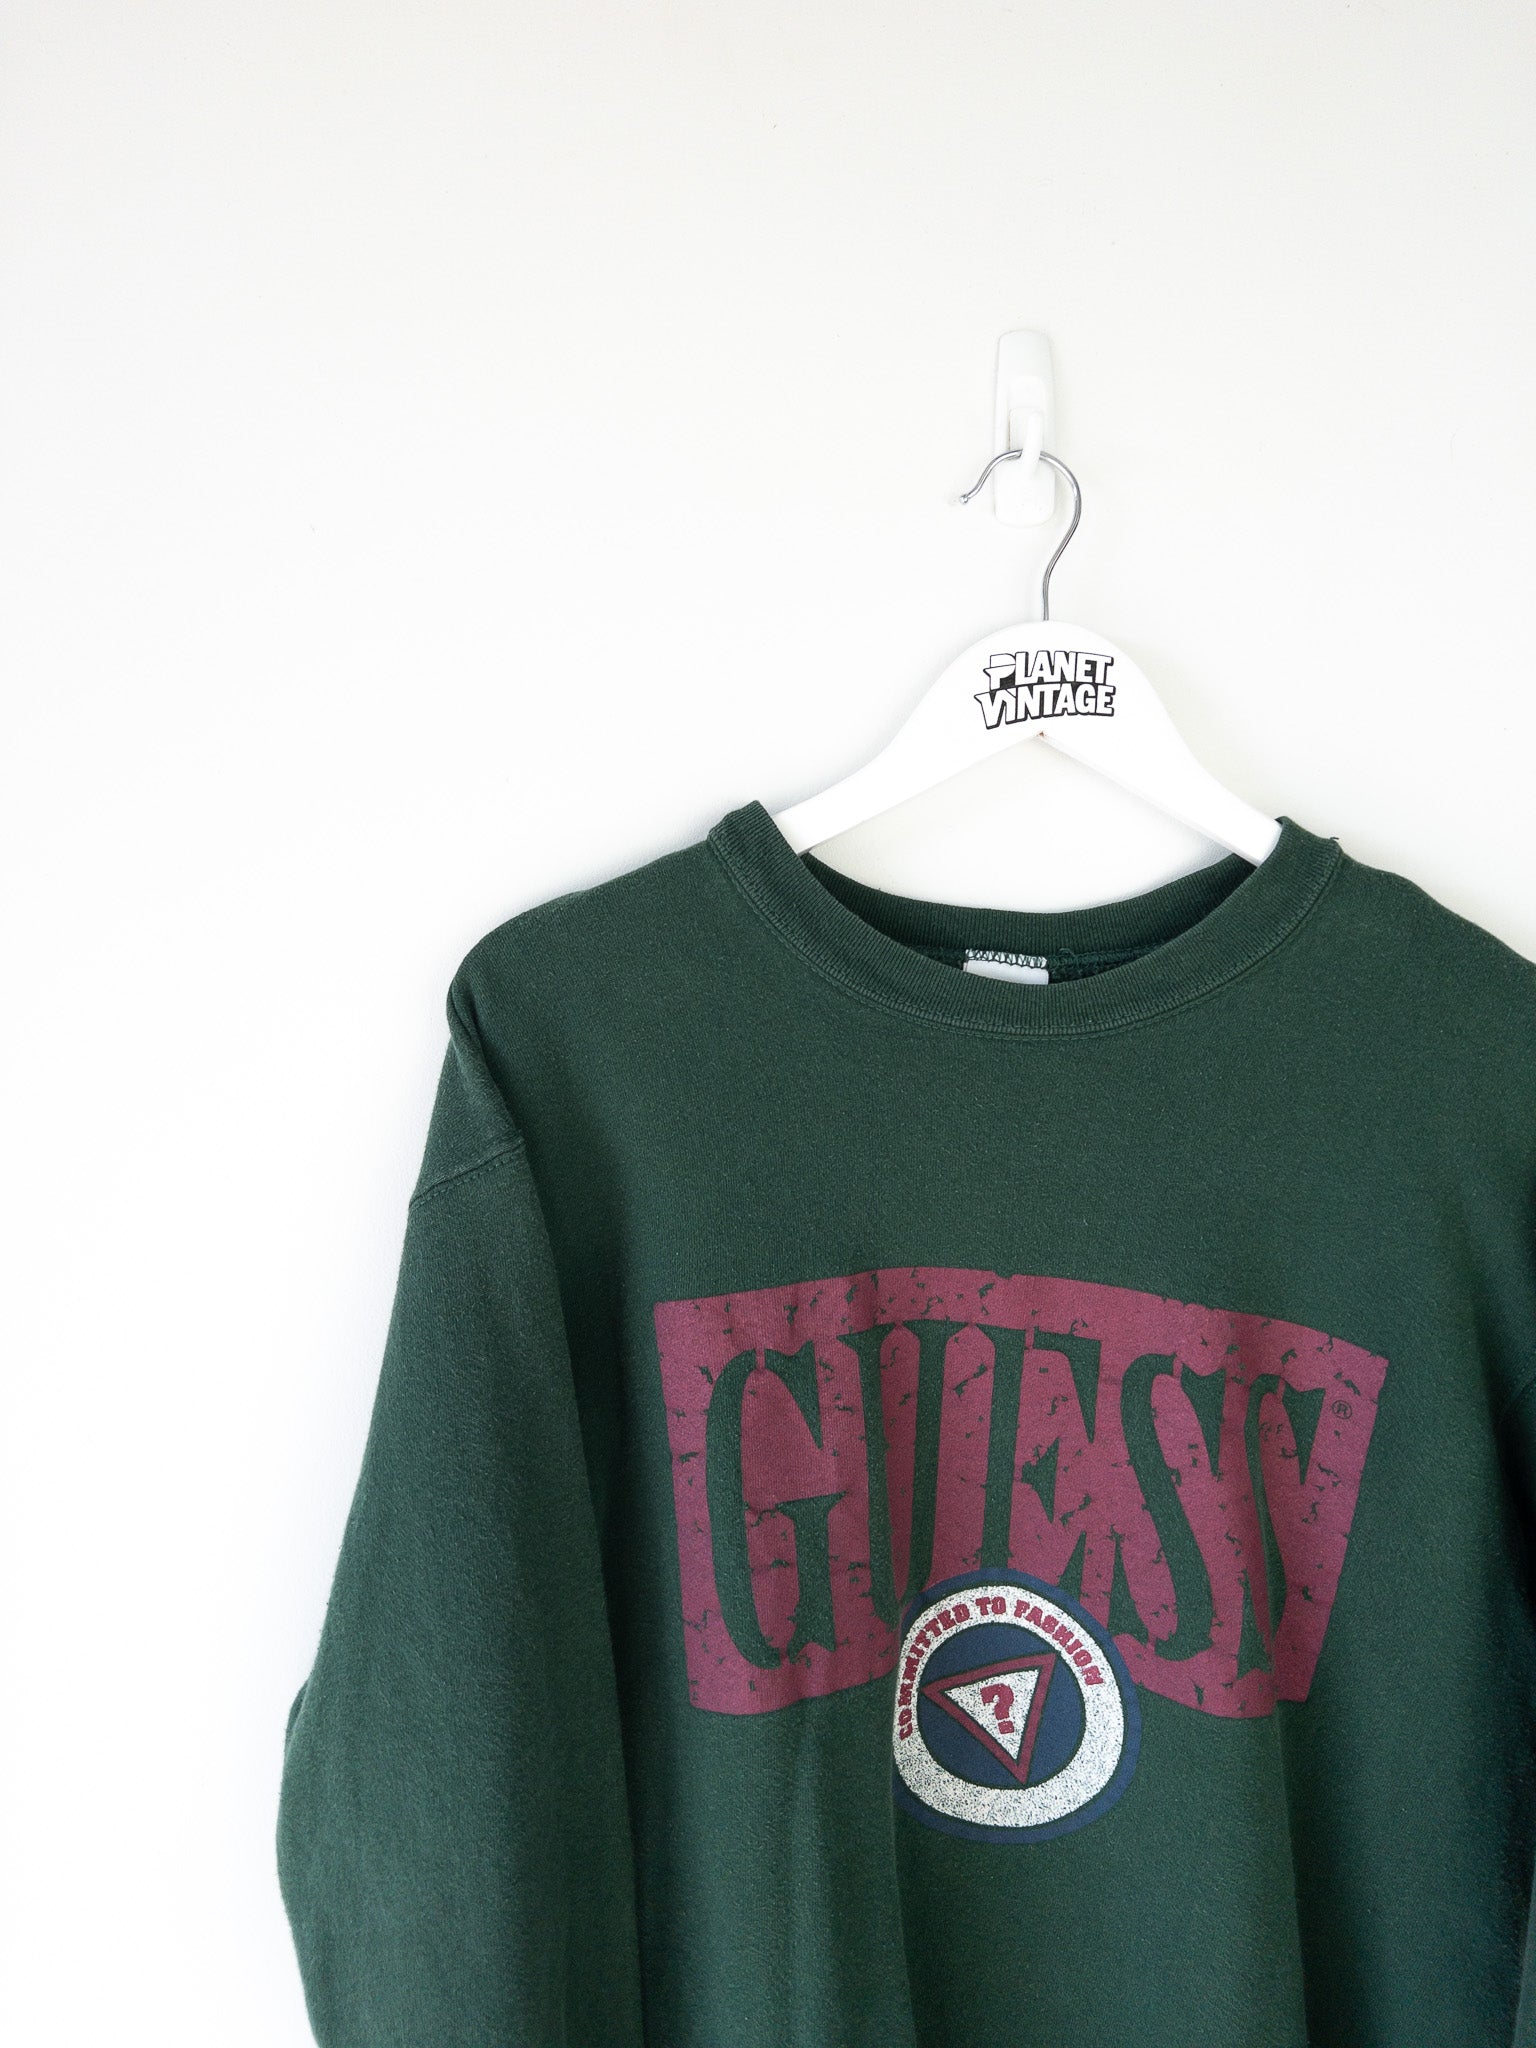 Vintage Guess Sweatshirt (M)